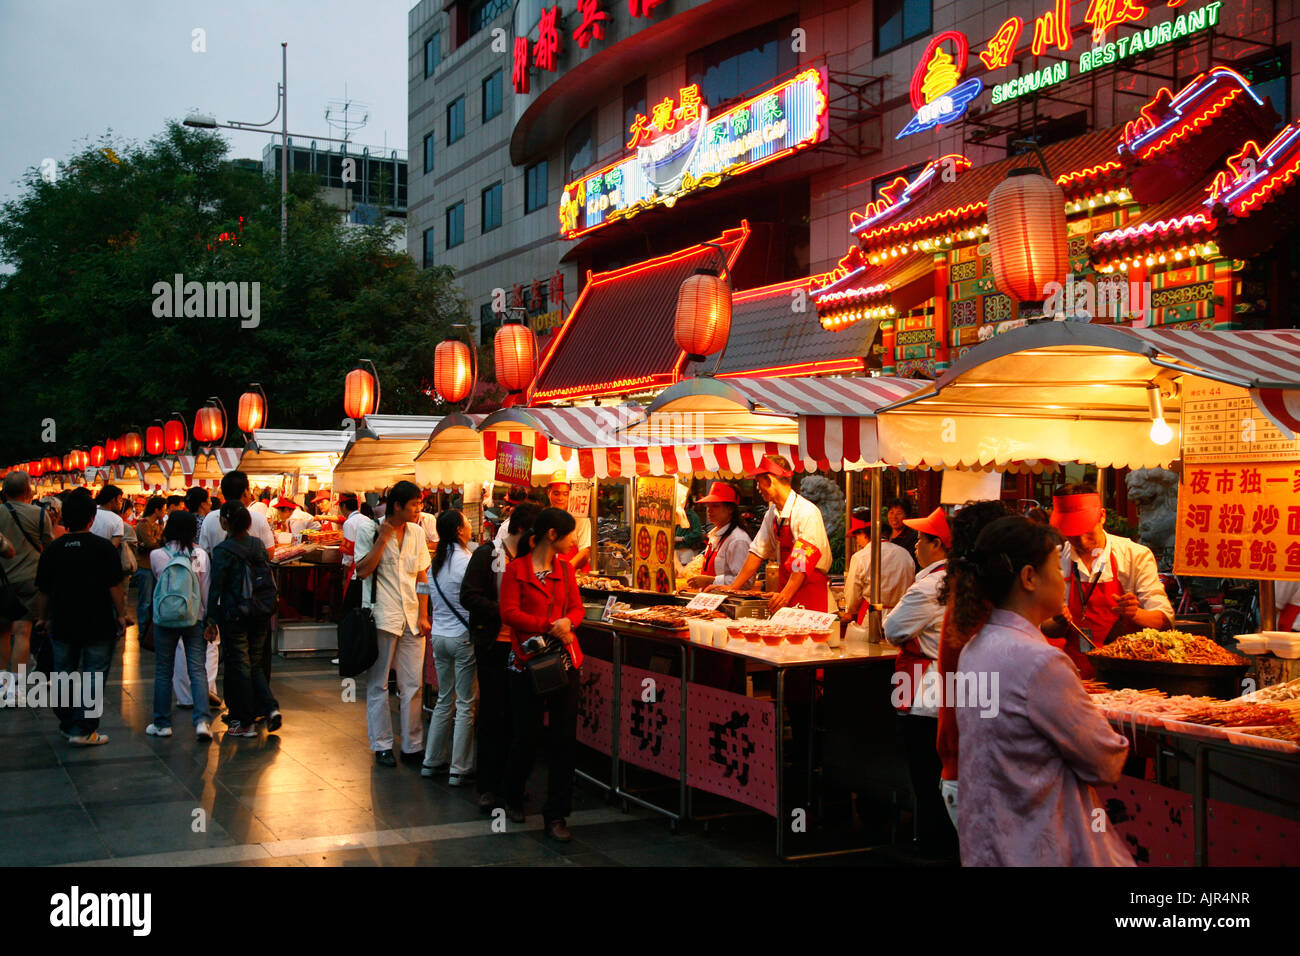 Il cibo si spegne al Donganmen notte mercato alimentare vicino Wangfuging Dajie beijing cina Foto Stock